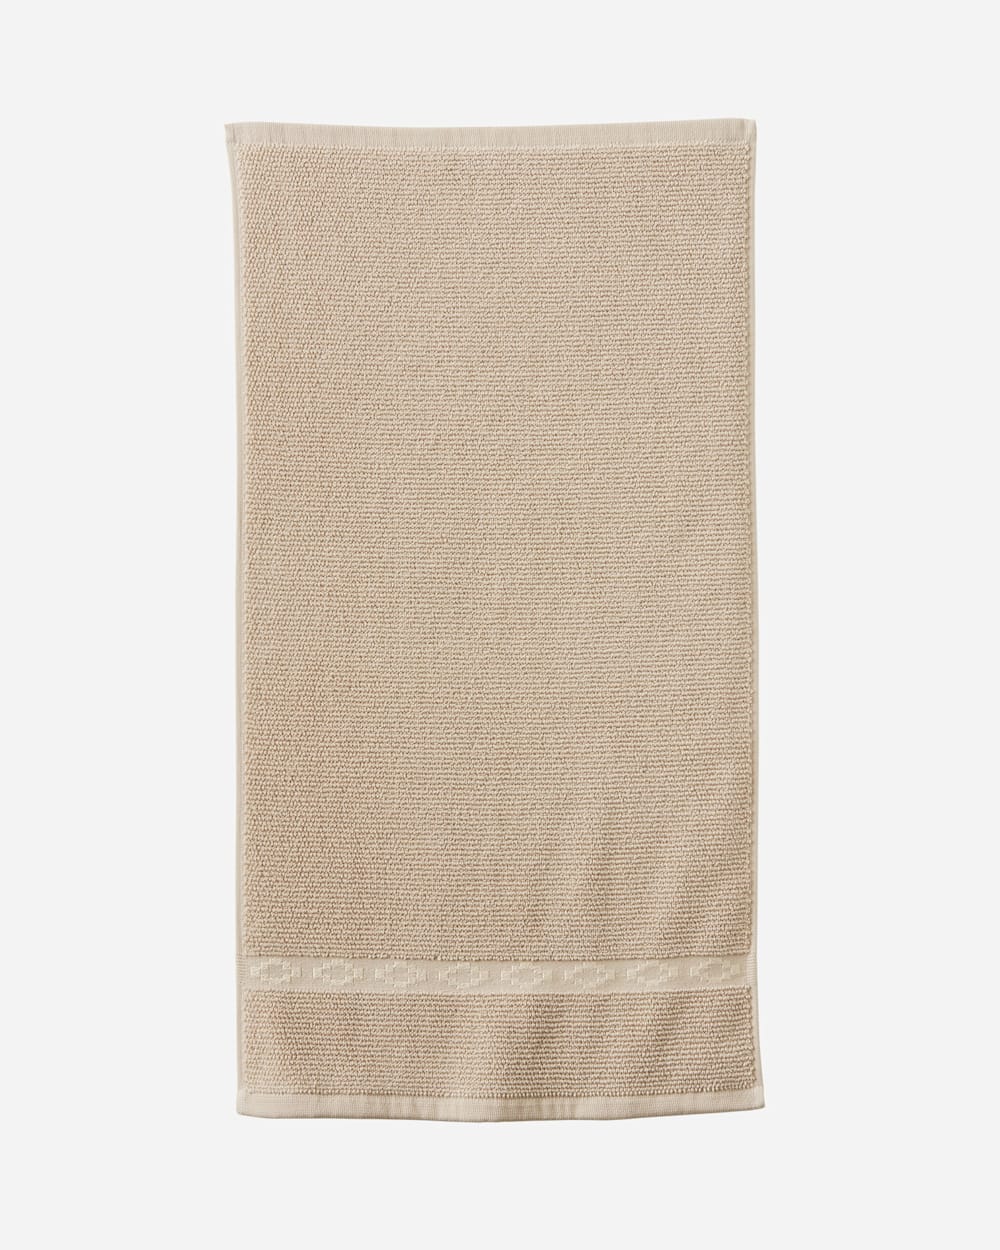 ALTERNATE VIEW OF GRAND TETON TOWEL SET IN TAN image number 2